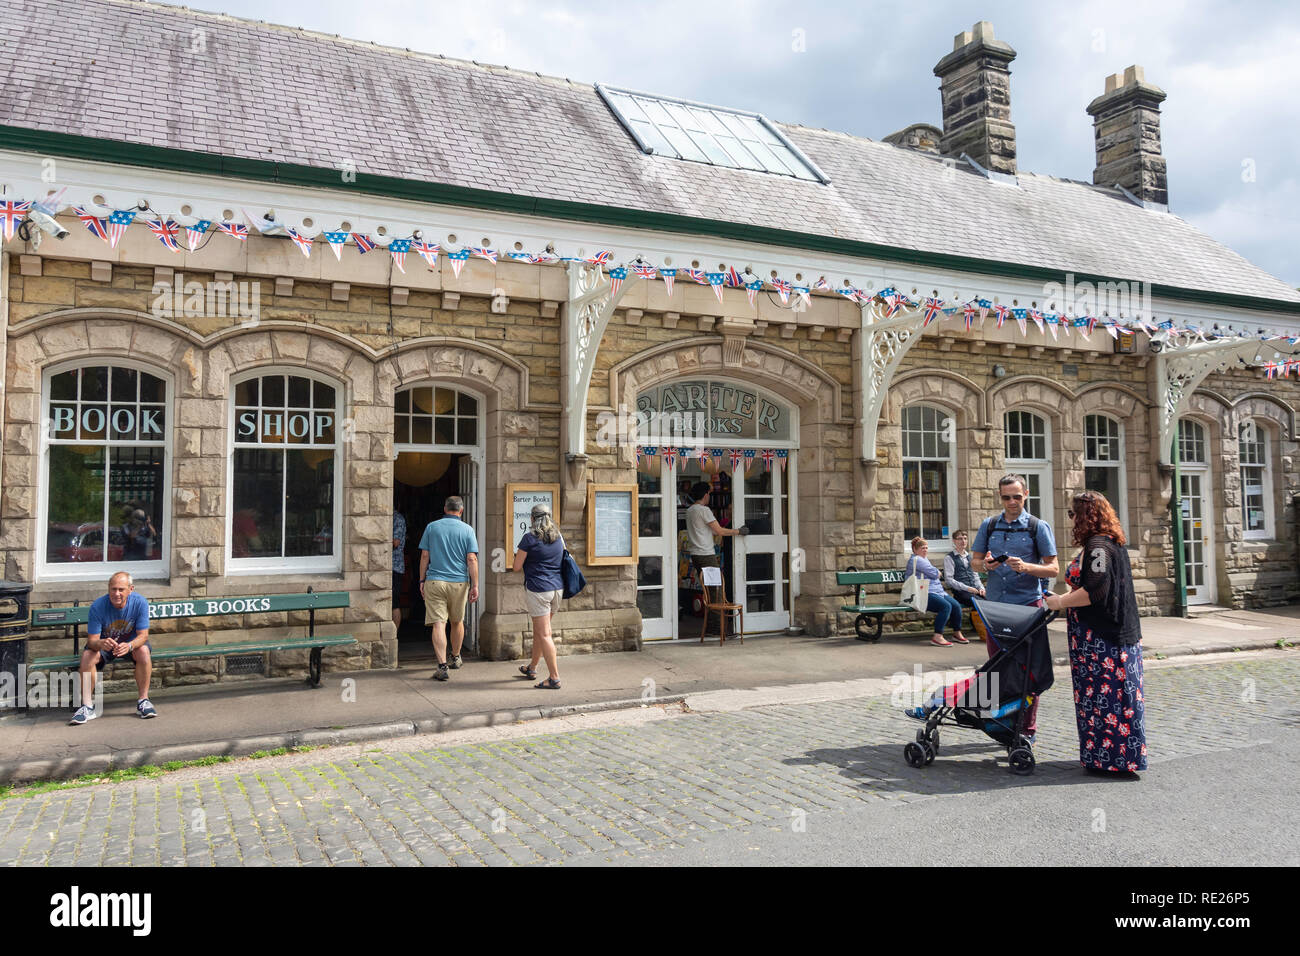 Entrance to Barter Books (secondhand bookshop) Alnwick Station, Alnwick, Northumberland, England, United Kingdom Stock Photo